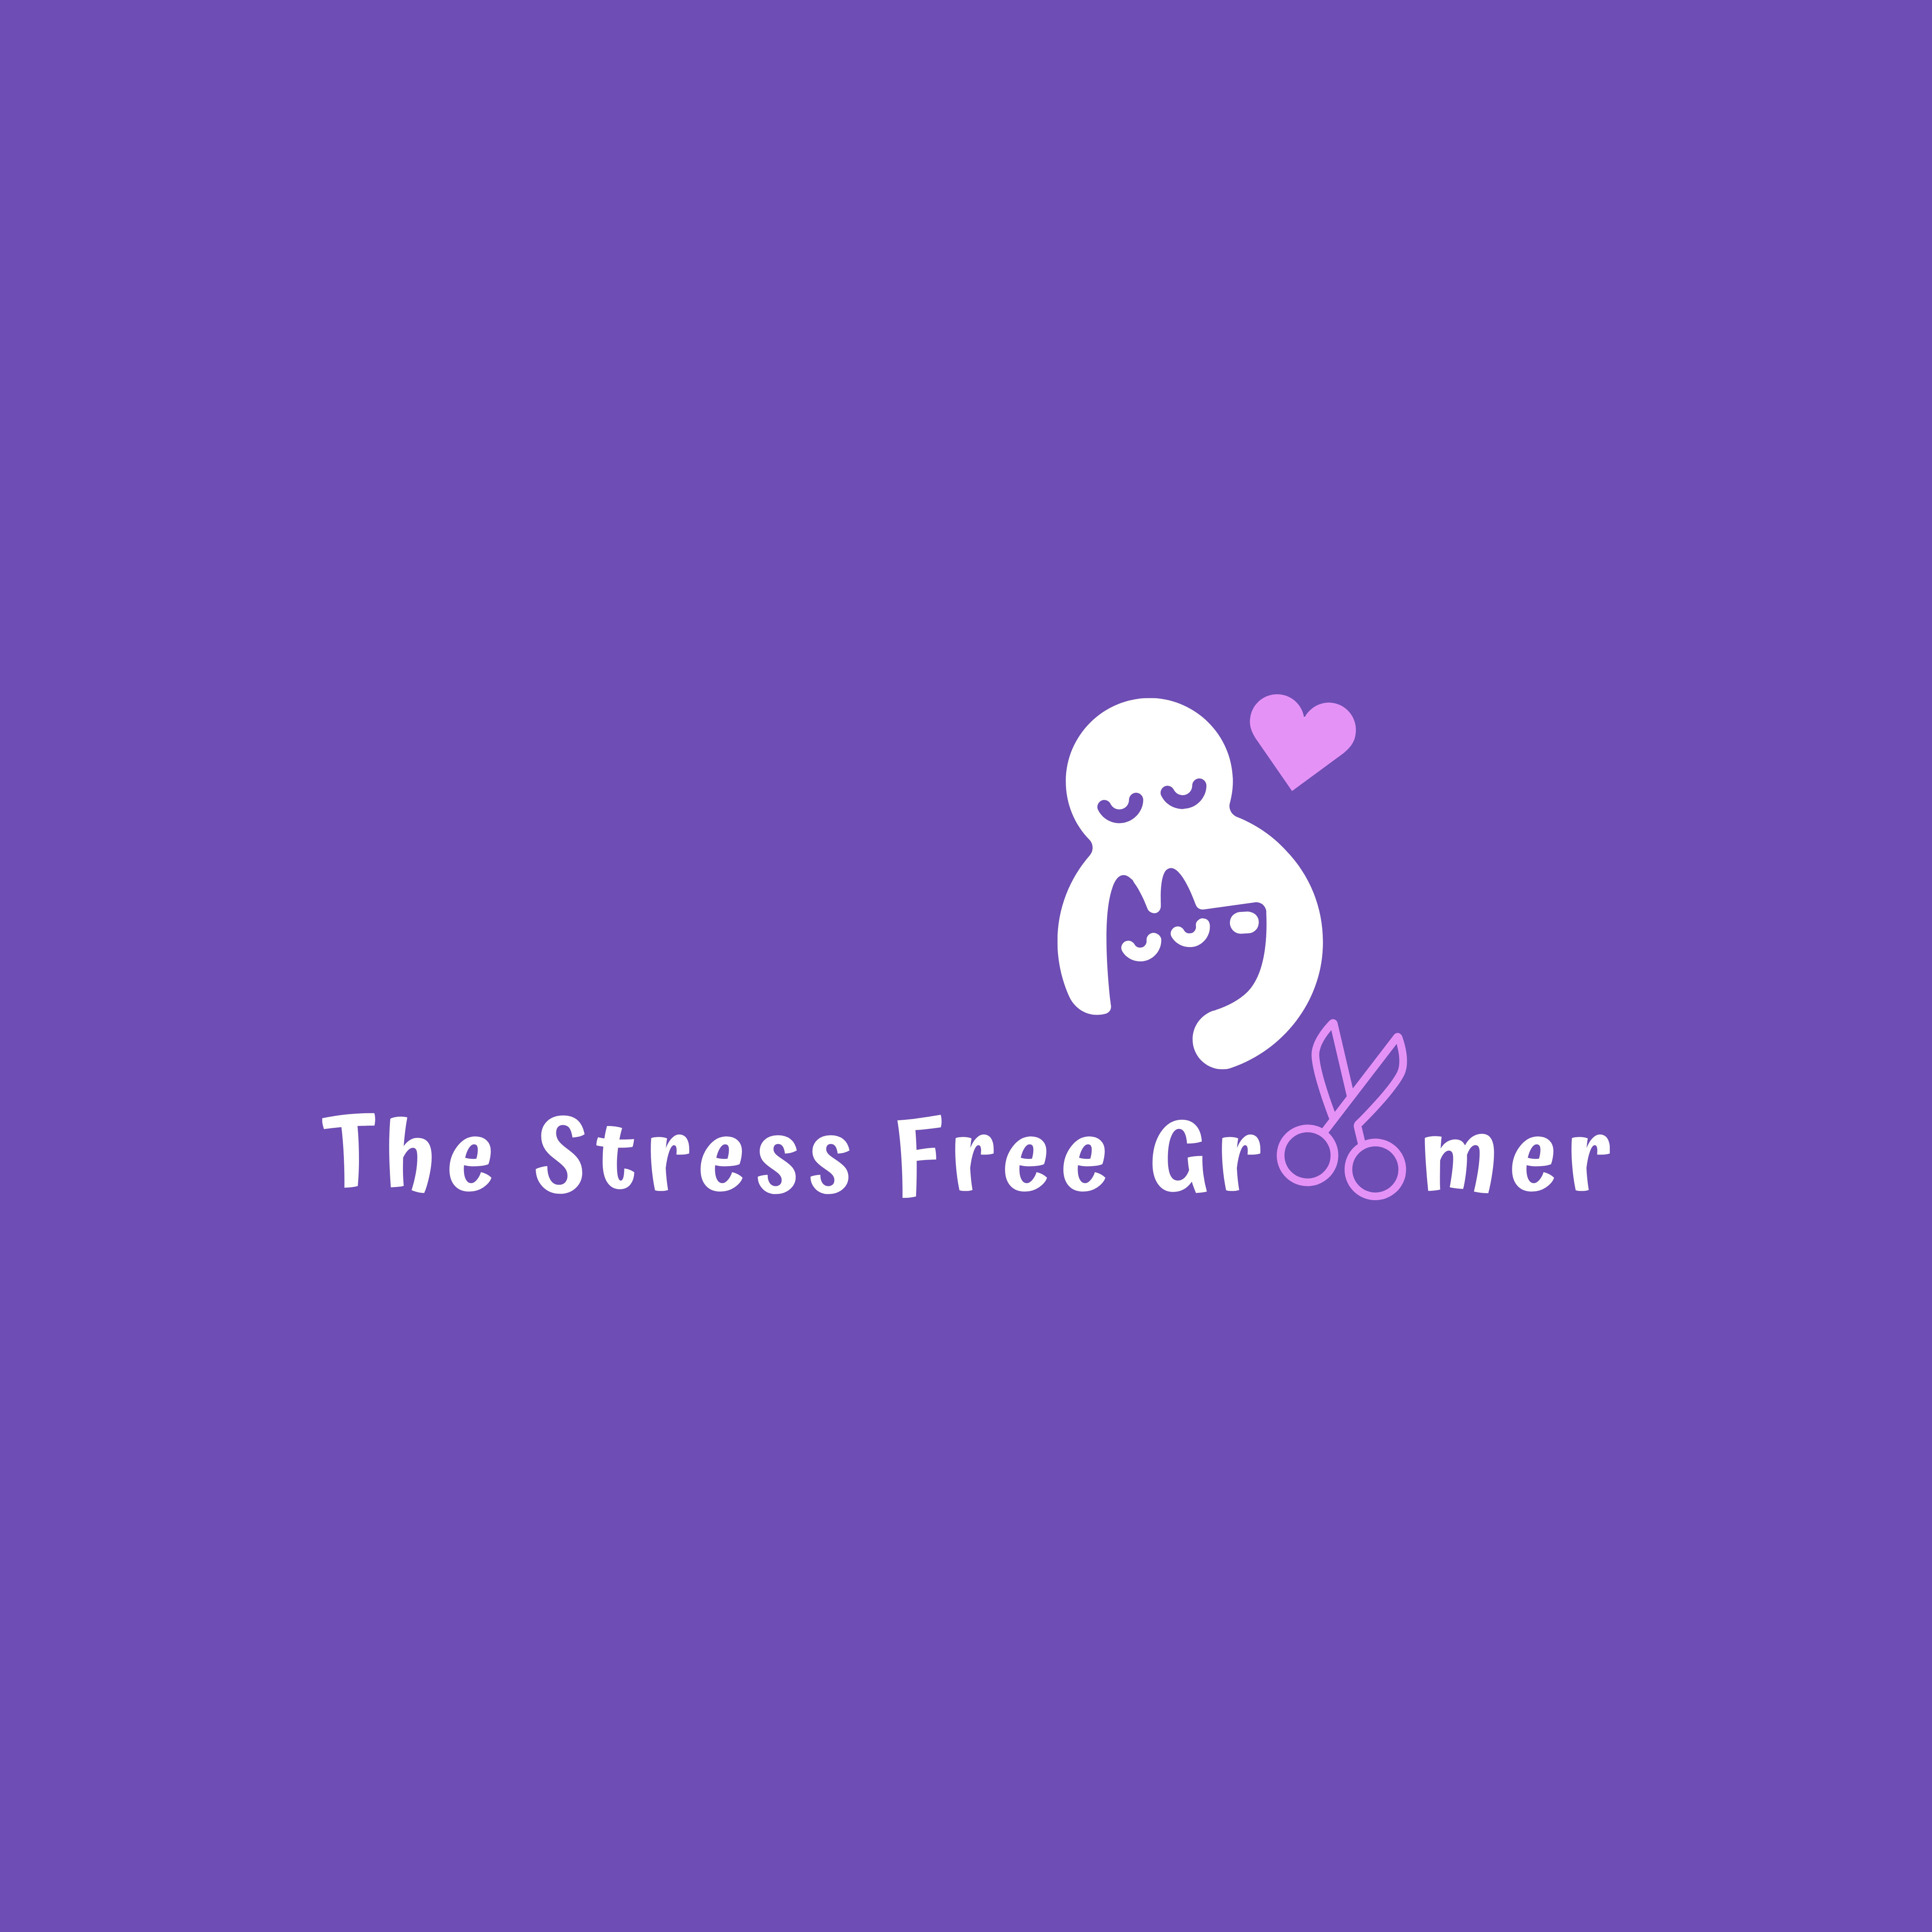 The Stress Free Groomer